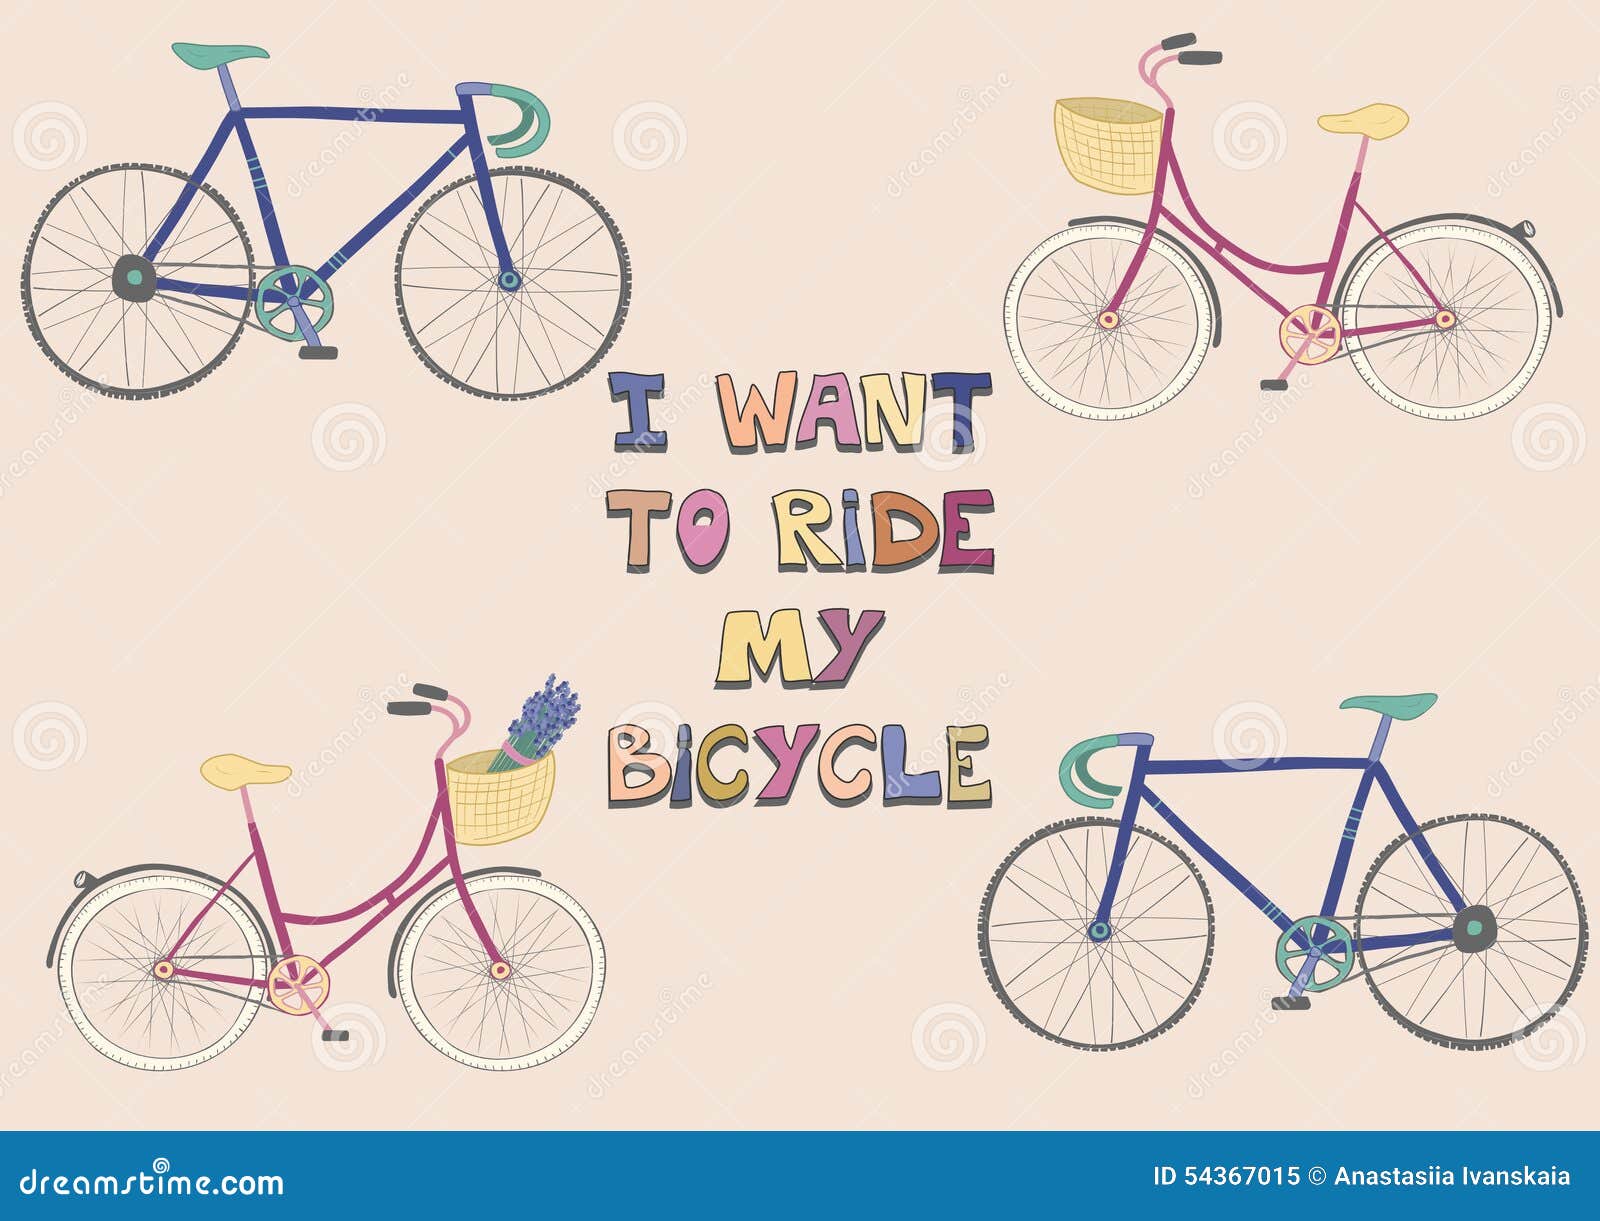 I want bike. Плакат Bicycle Race. I want to Ride my Bicycle. Плакат i want to Ride. I want to Ride my Bicycle стихотворение.